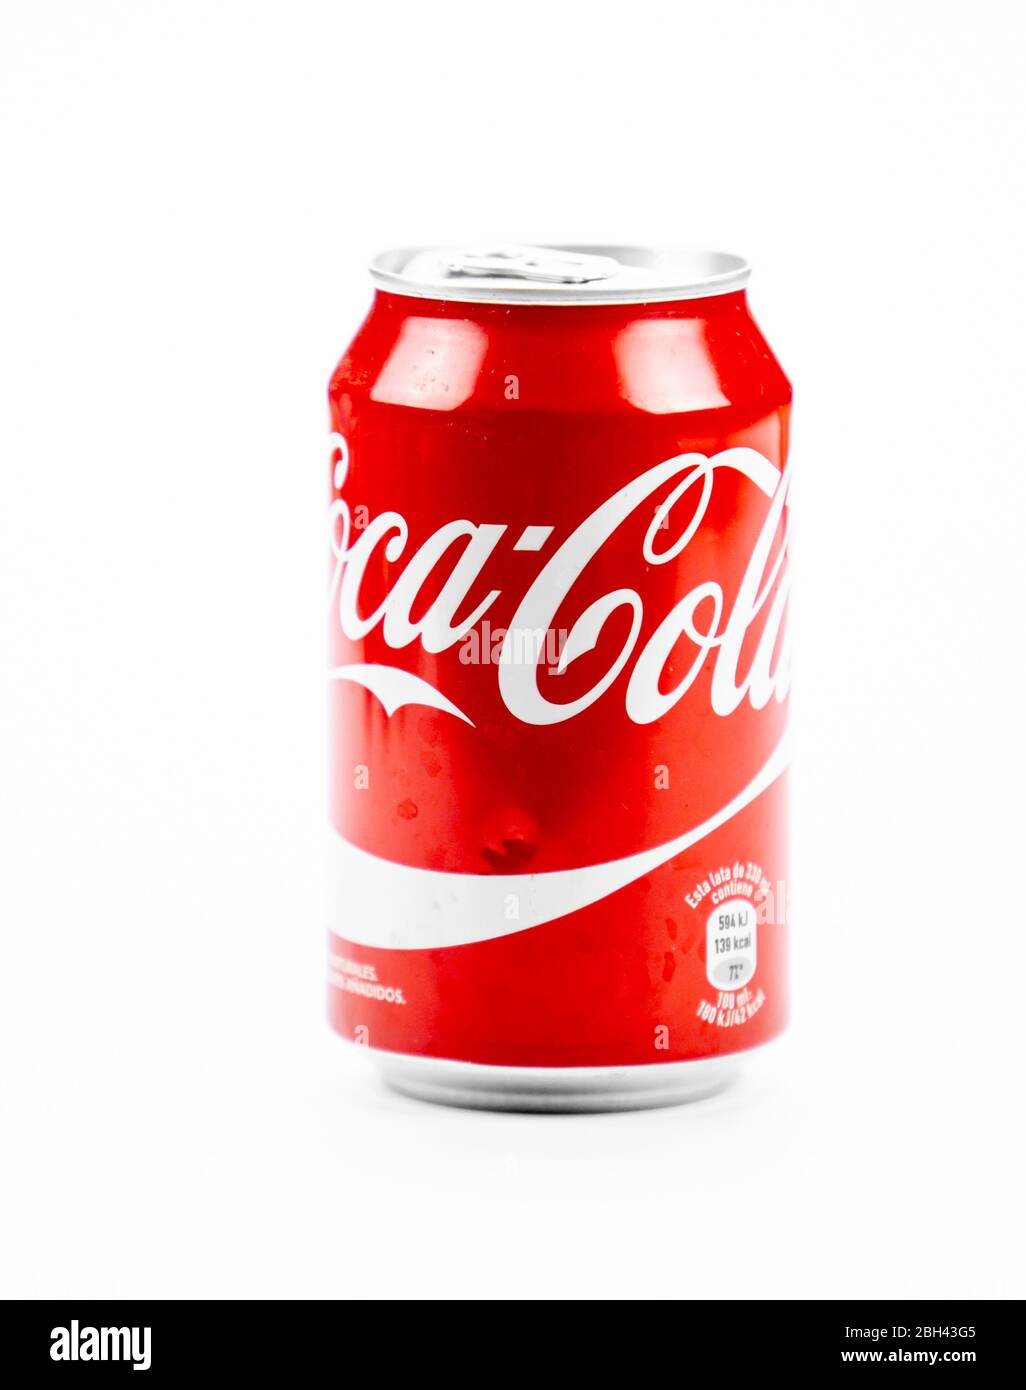 Atlanta, Georgia, USA April 4, 2020: aluminum Coca-Cola can isolated on white background Stock Photo